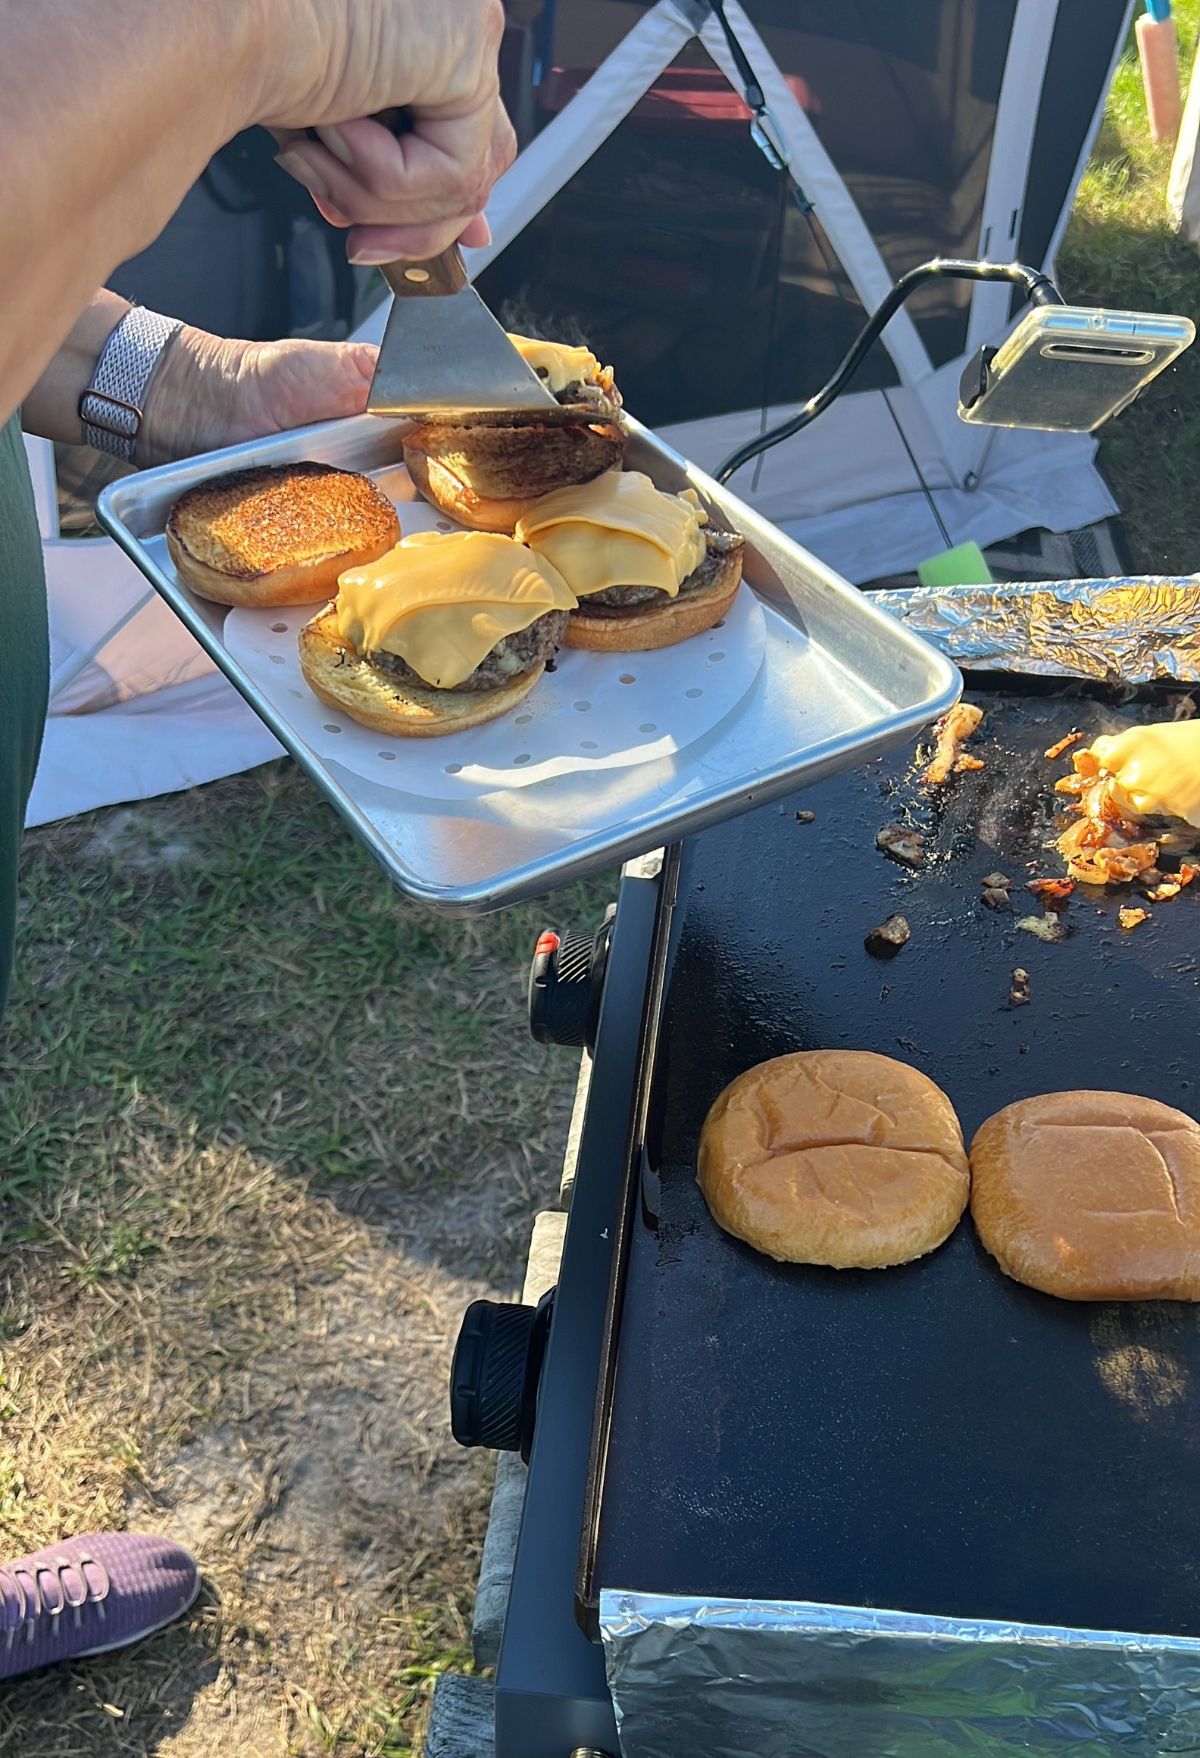 A woman is preparing hamburgers on a grill.